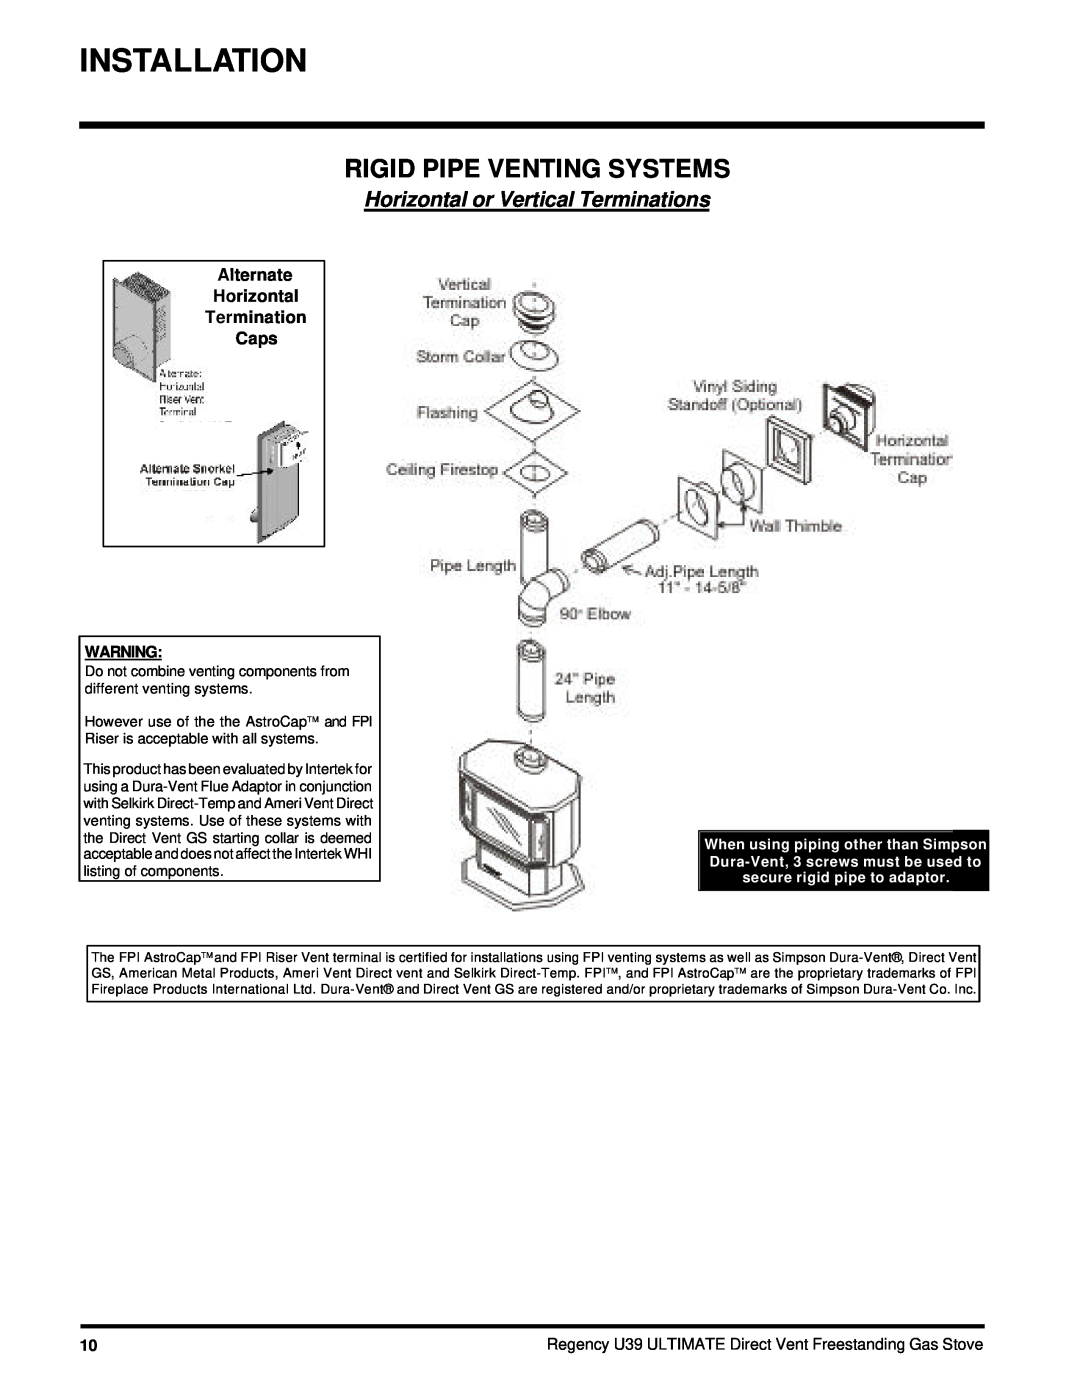 Regency U39-LP, U39-NG installation manual Rigid Pipe Venting Systems, Horizontal or Vertical Terminations 